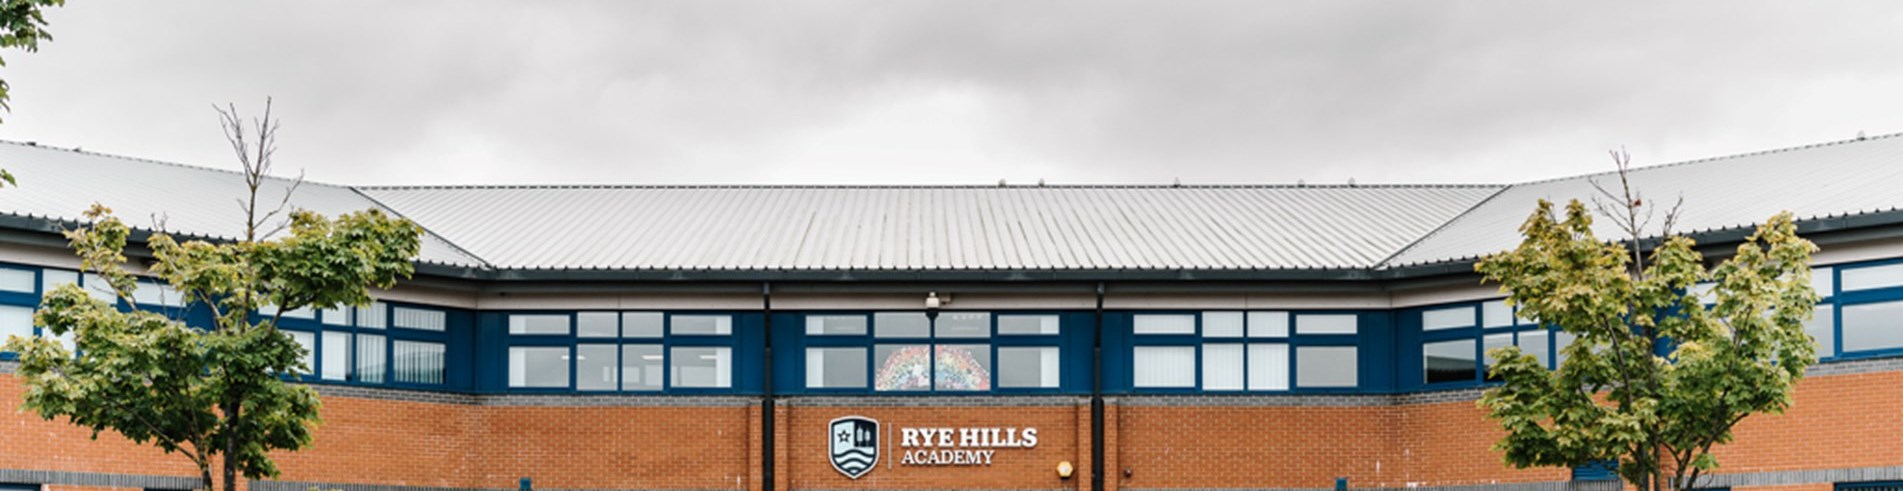 Rye Hills Academy-157